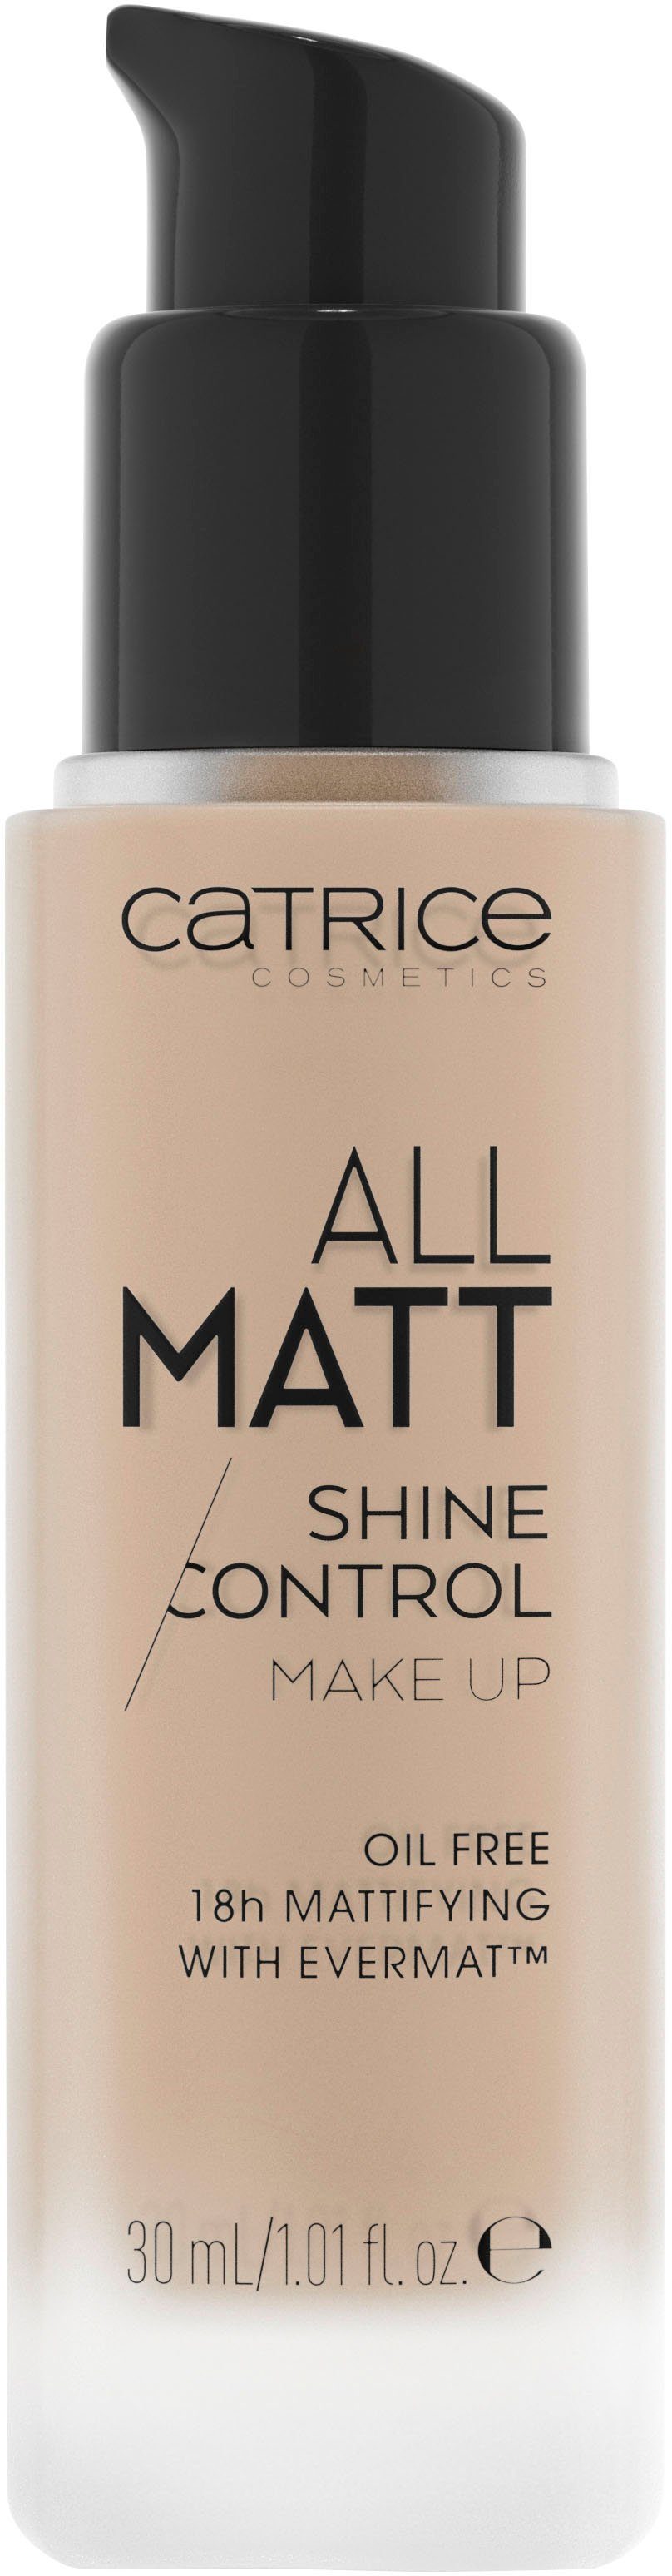 Make Control All Vanilla Matt Shine Catrice Beige Up Foundation Cool